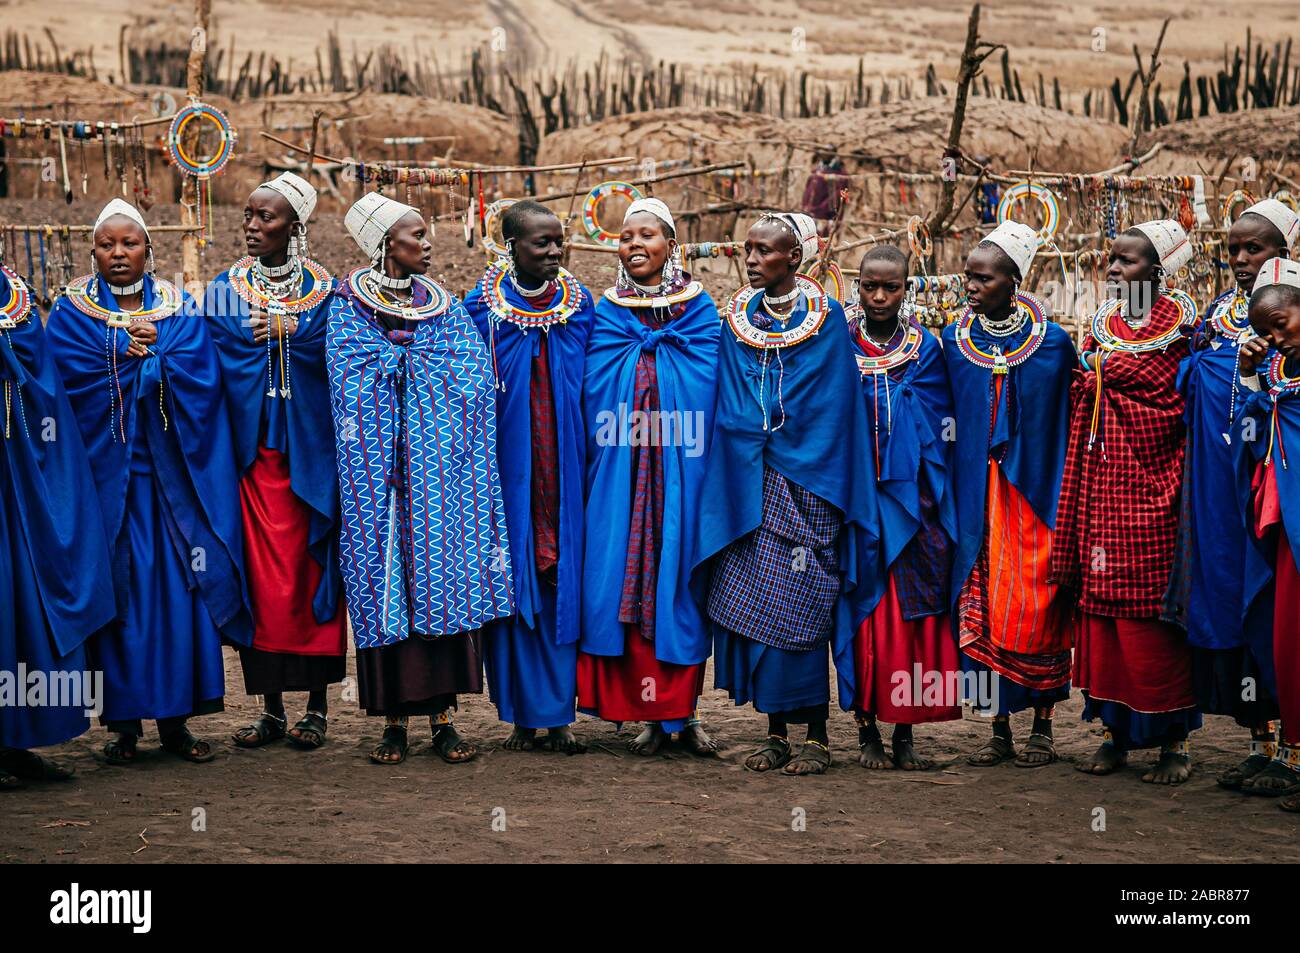 JUN 24, 2011 Serengeti, Tanzania - Group of African Masai or Maasai tribe woman in blue cloth wearing headpiece and stone beads ornaments. Ethnic grou Stock Photo